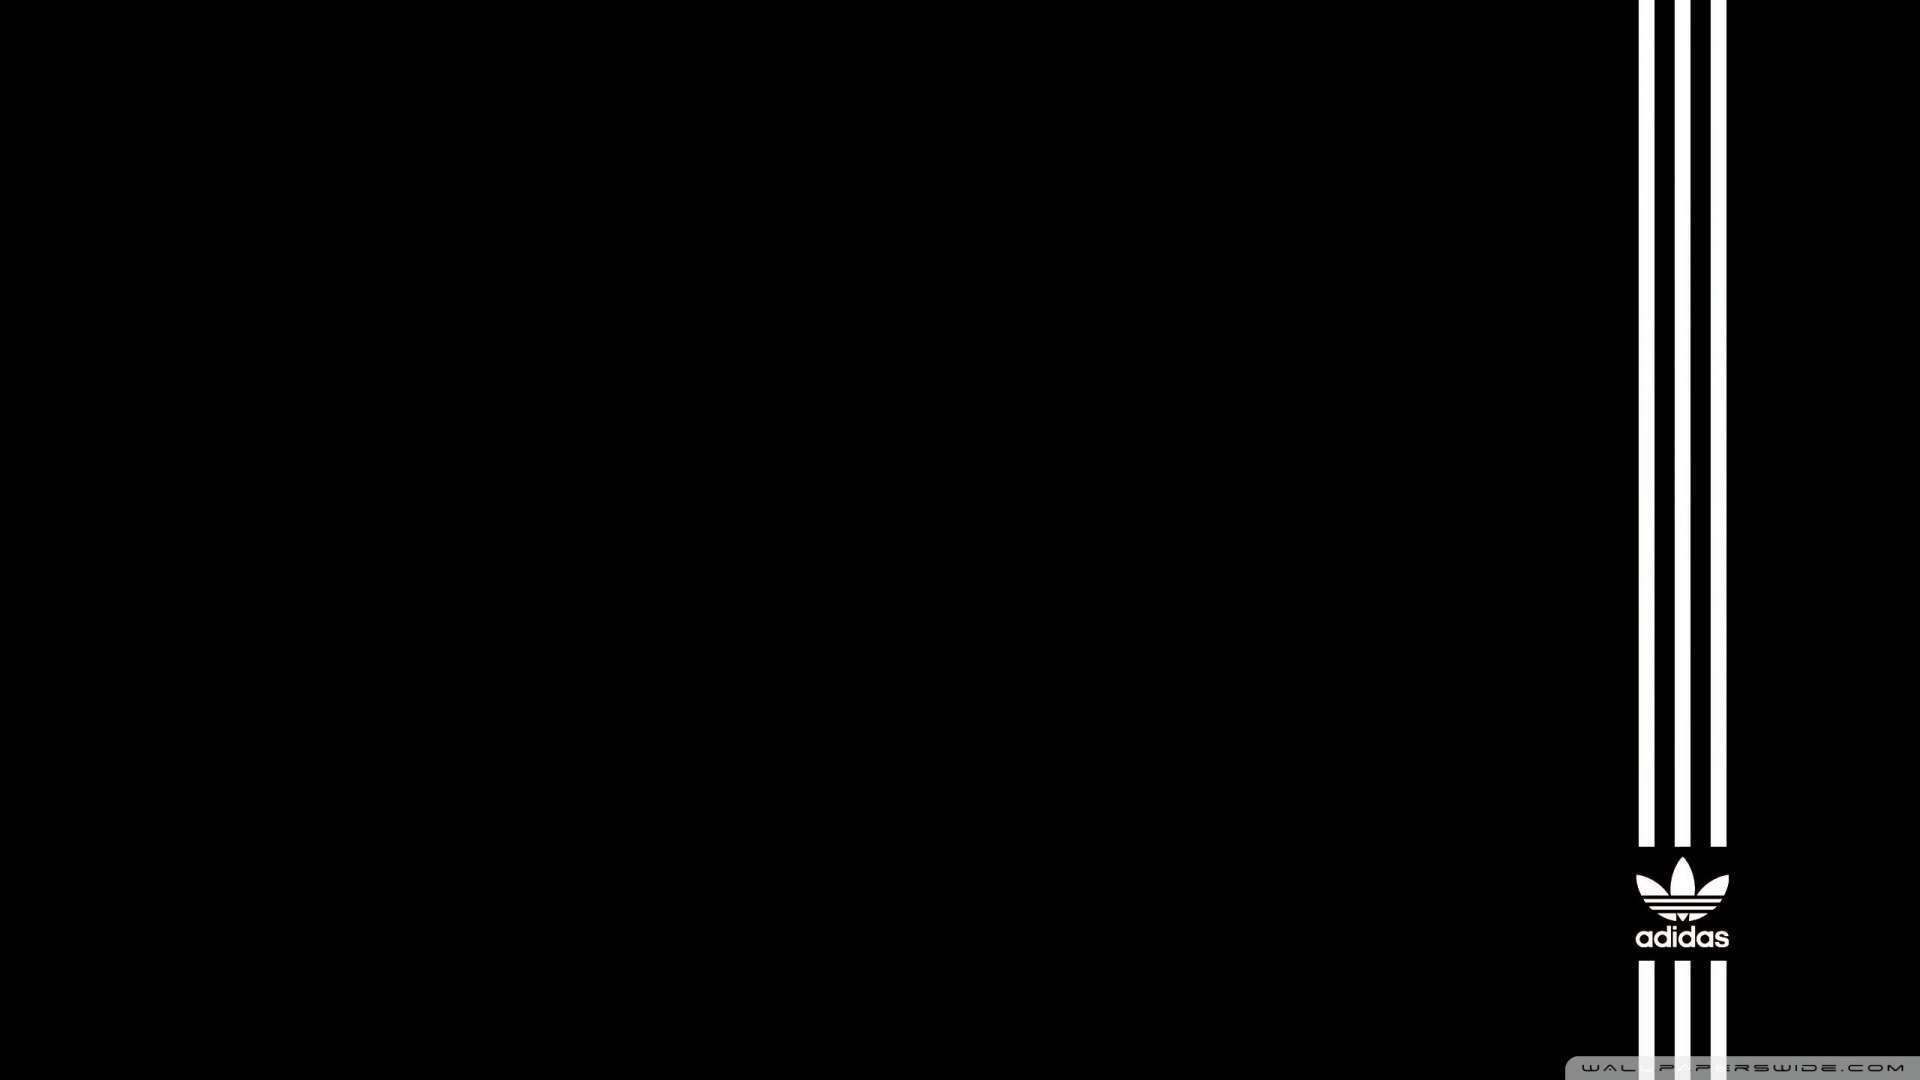 Free Download Wallpaper Adidas Black Background Wallpaper 1080p Hd Upload At 19x1080 For Your Desktop Mobile Tablet Explore 48 Black Wallpaper 1080p Free 1080p Wallpaper Summer Wallpaper Hd Widescreen